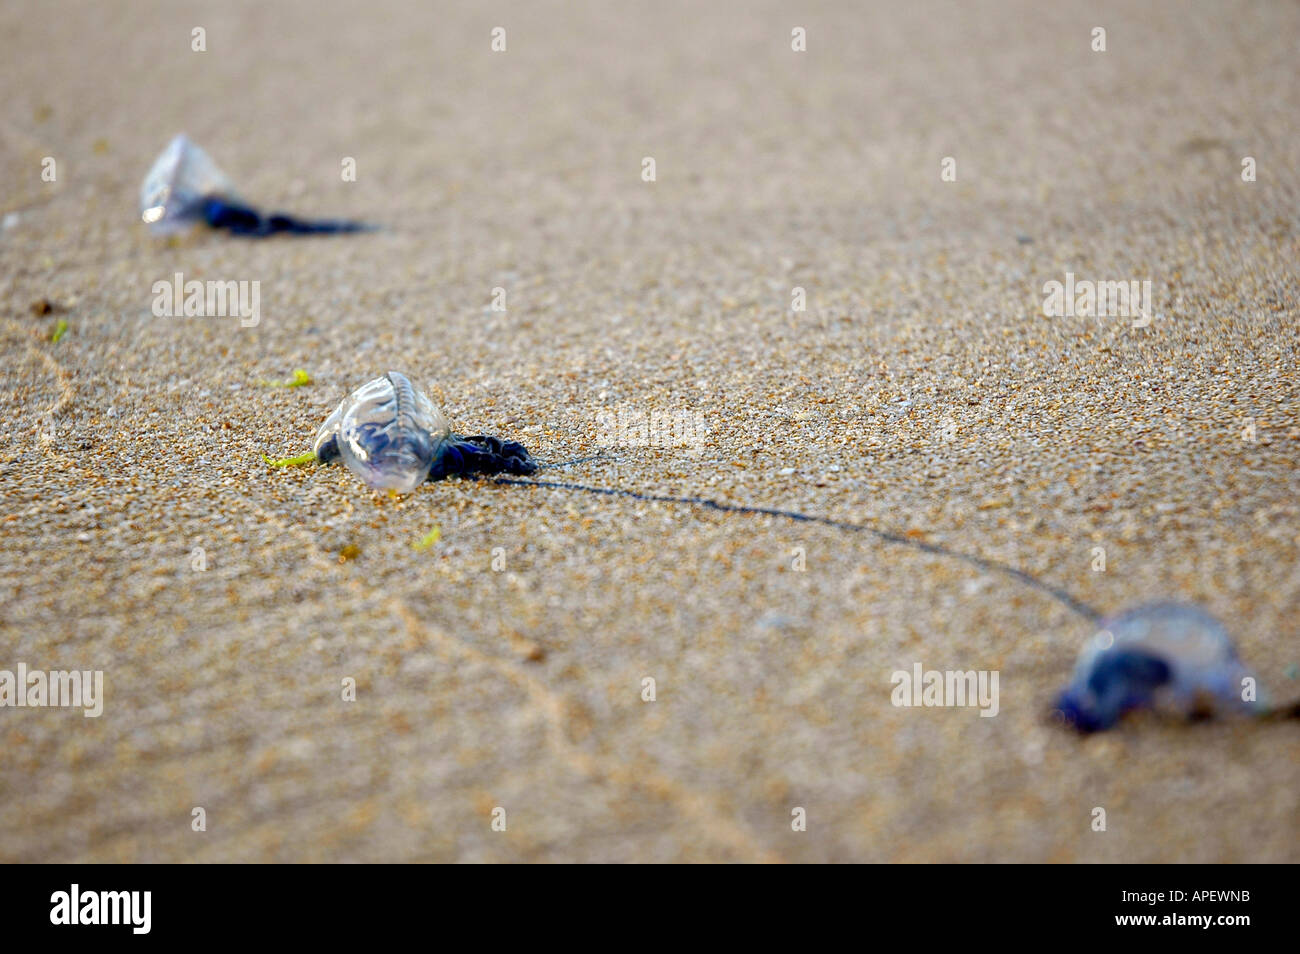 Bluebottle jellyfish stranded on a beach, Sydney, Australia. Stock Photo